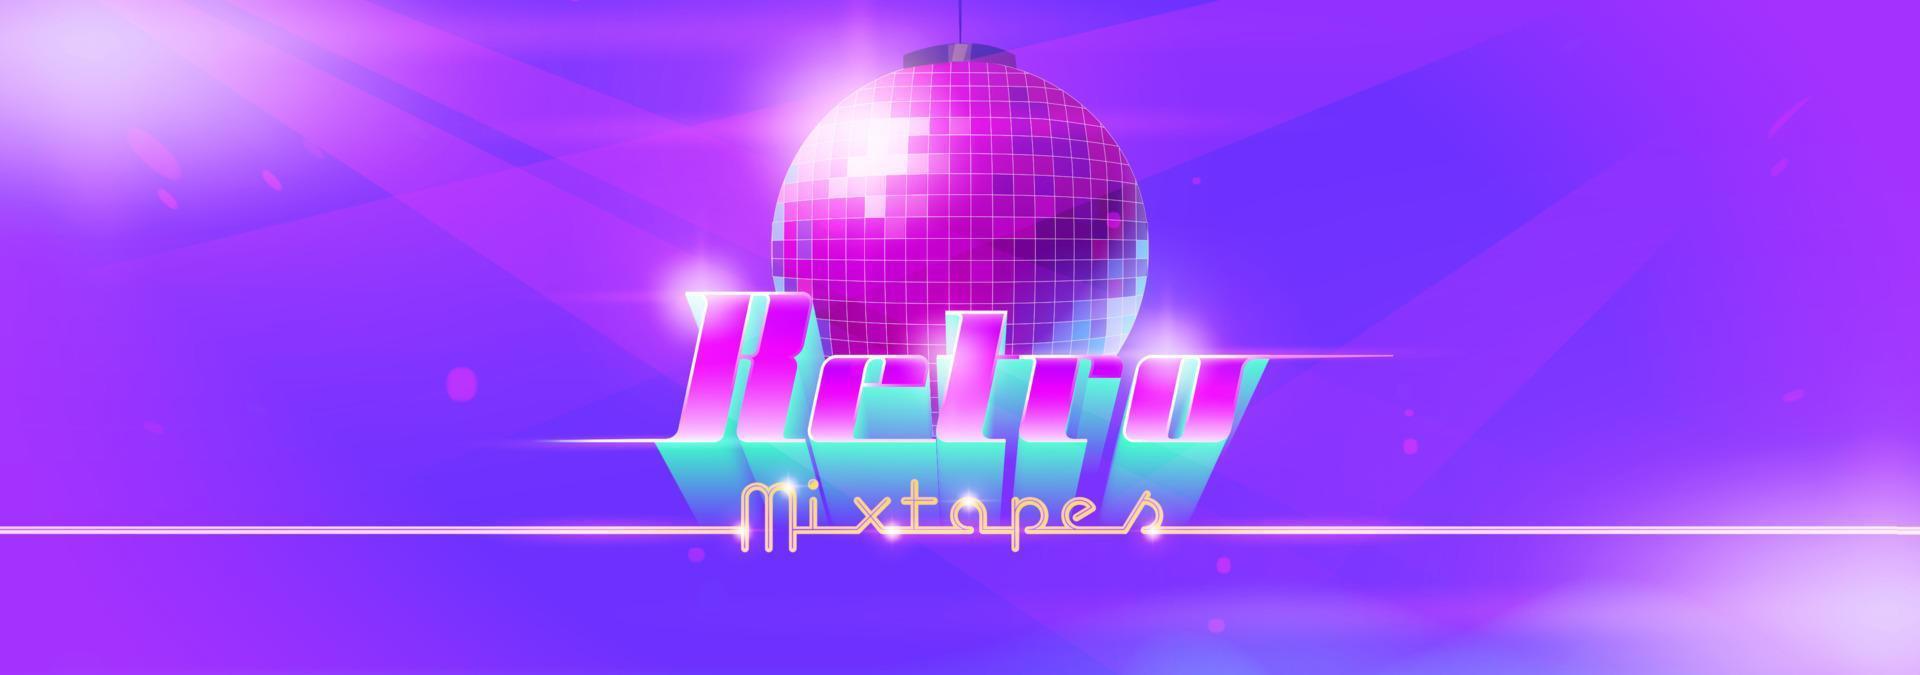 Retro-Mixtape-Party mit Tanzfläche, Discokugel vektor